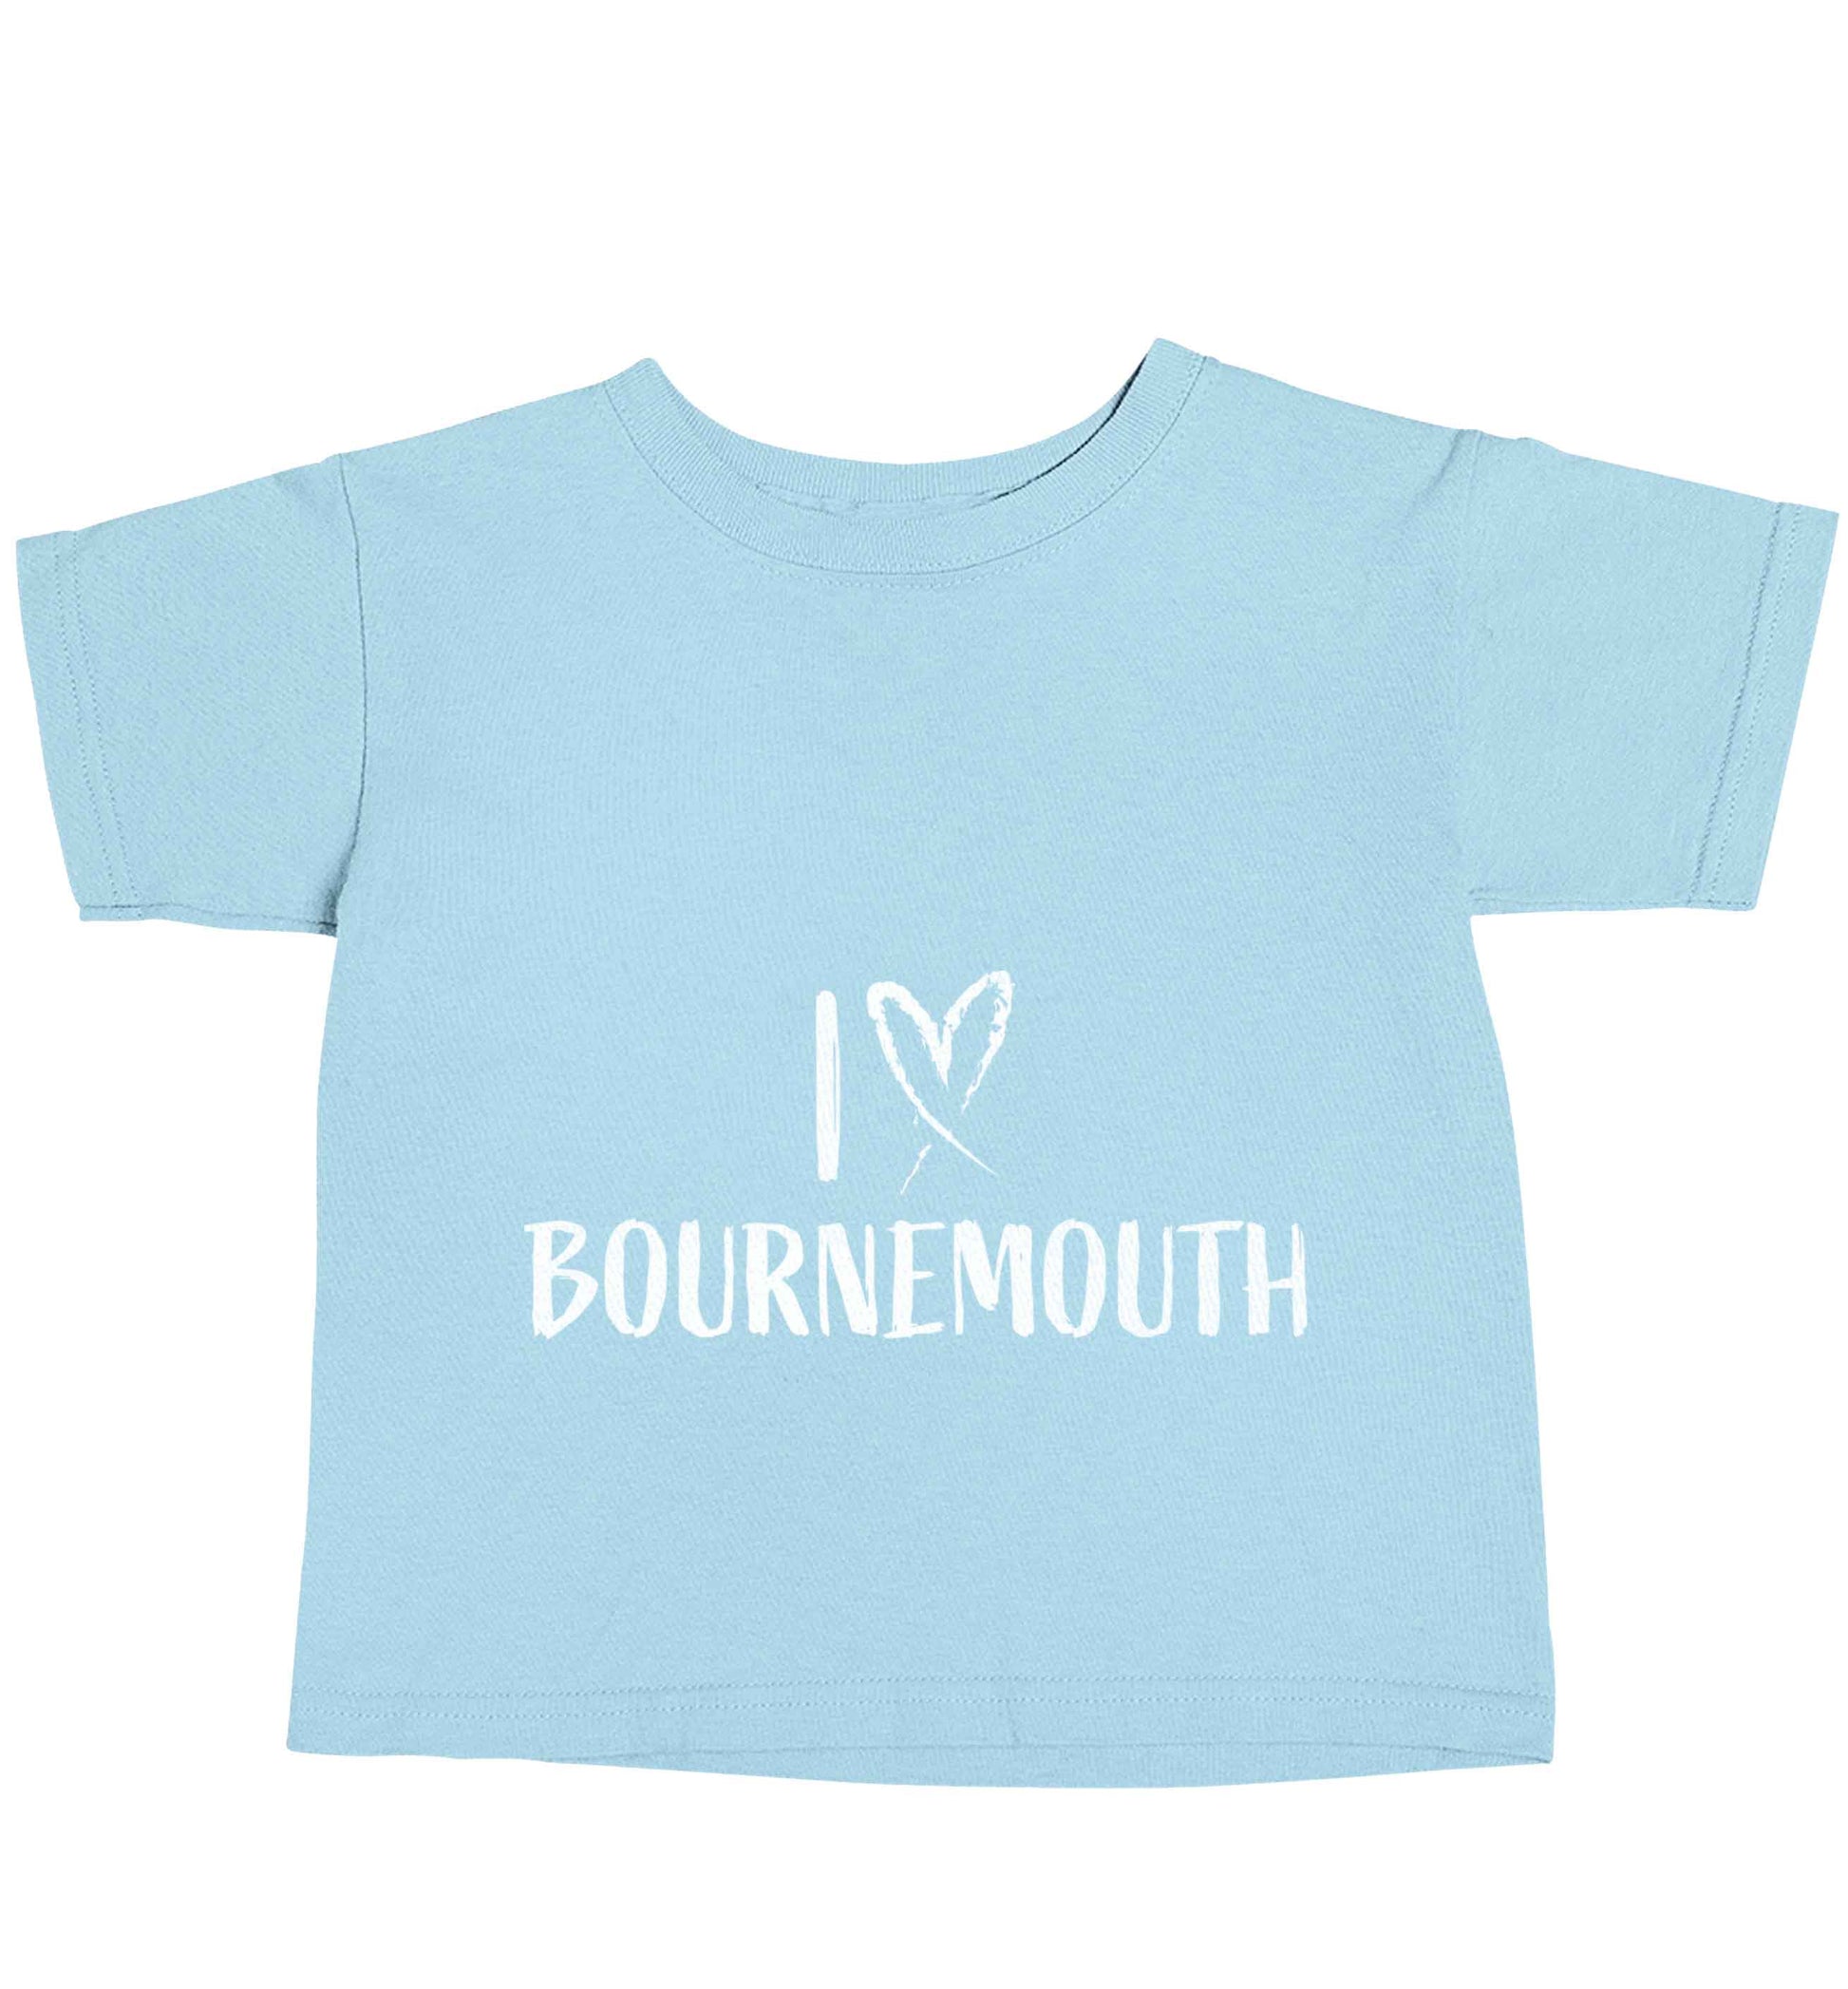 I love Bournemouth light blue baby toddler Tshirt 2 Years